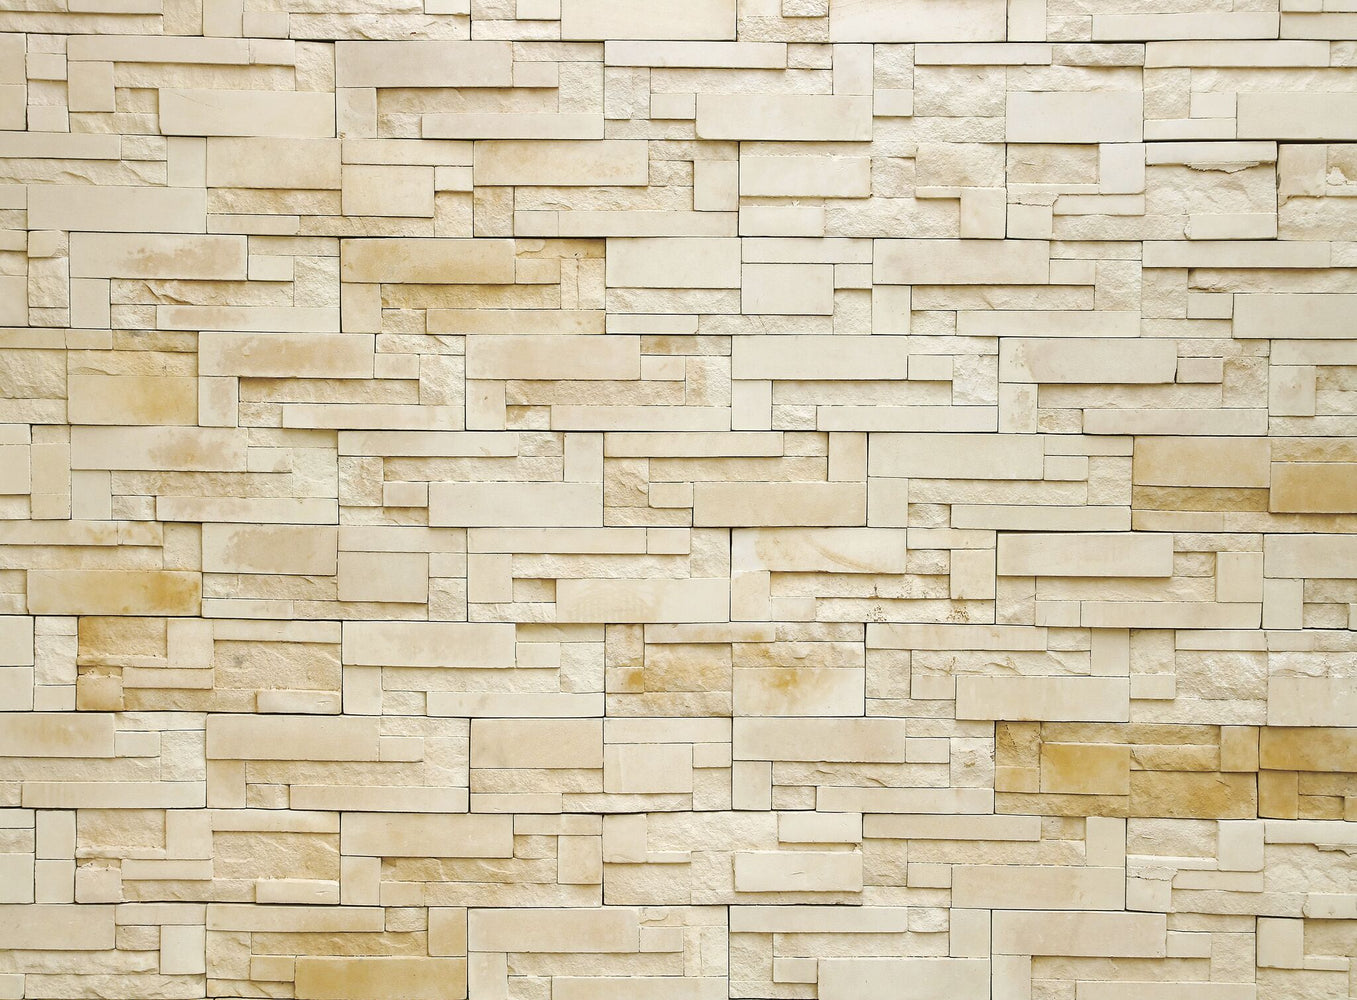 Sandstone Rock Wall 3.15m x 2.32m 4 Piece Giant Wallpaper Wall Mural